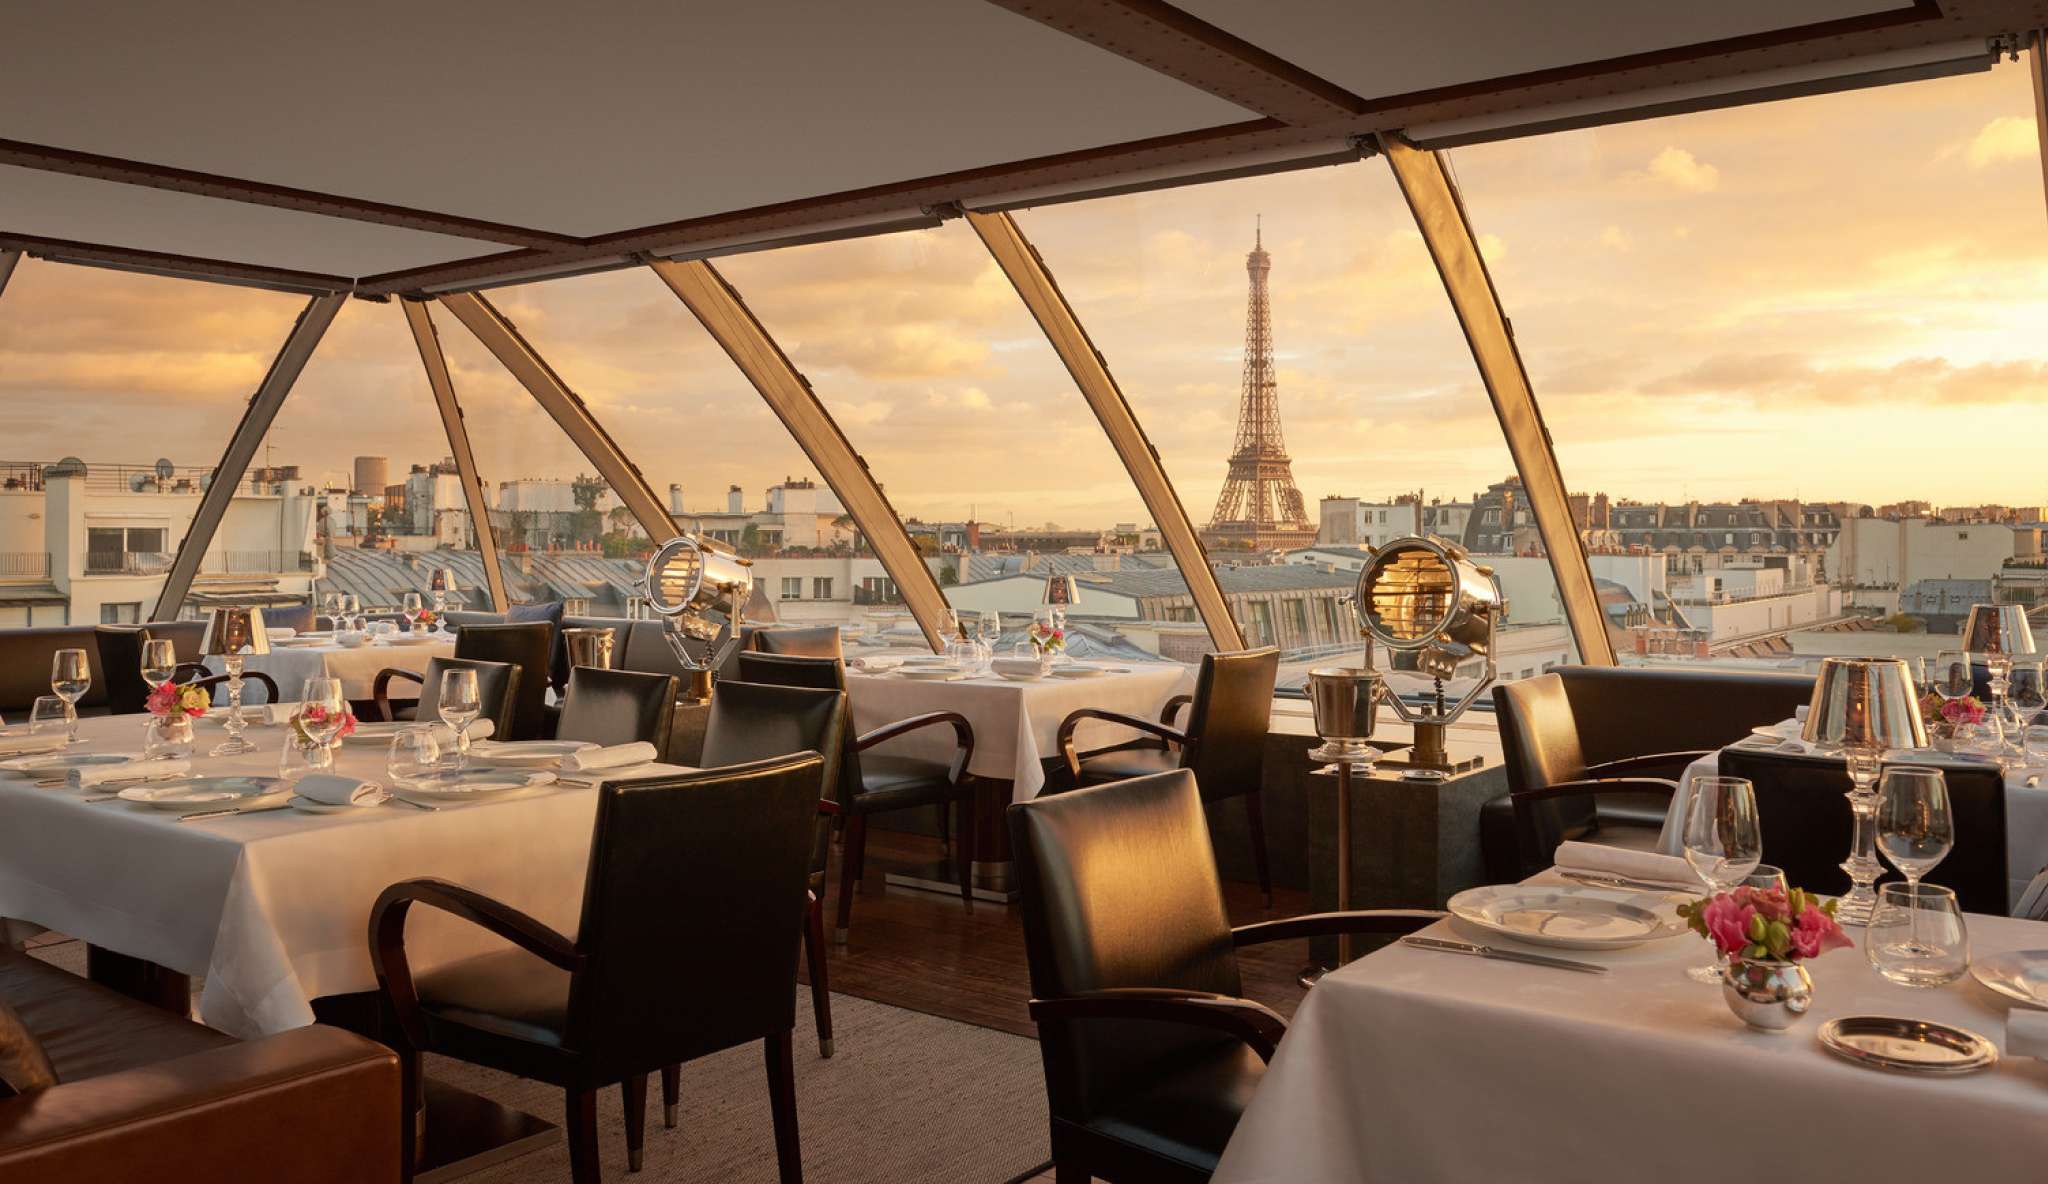 Paris_dining_l'oiseau blanc_ restaurant_evening_hr (4).